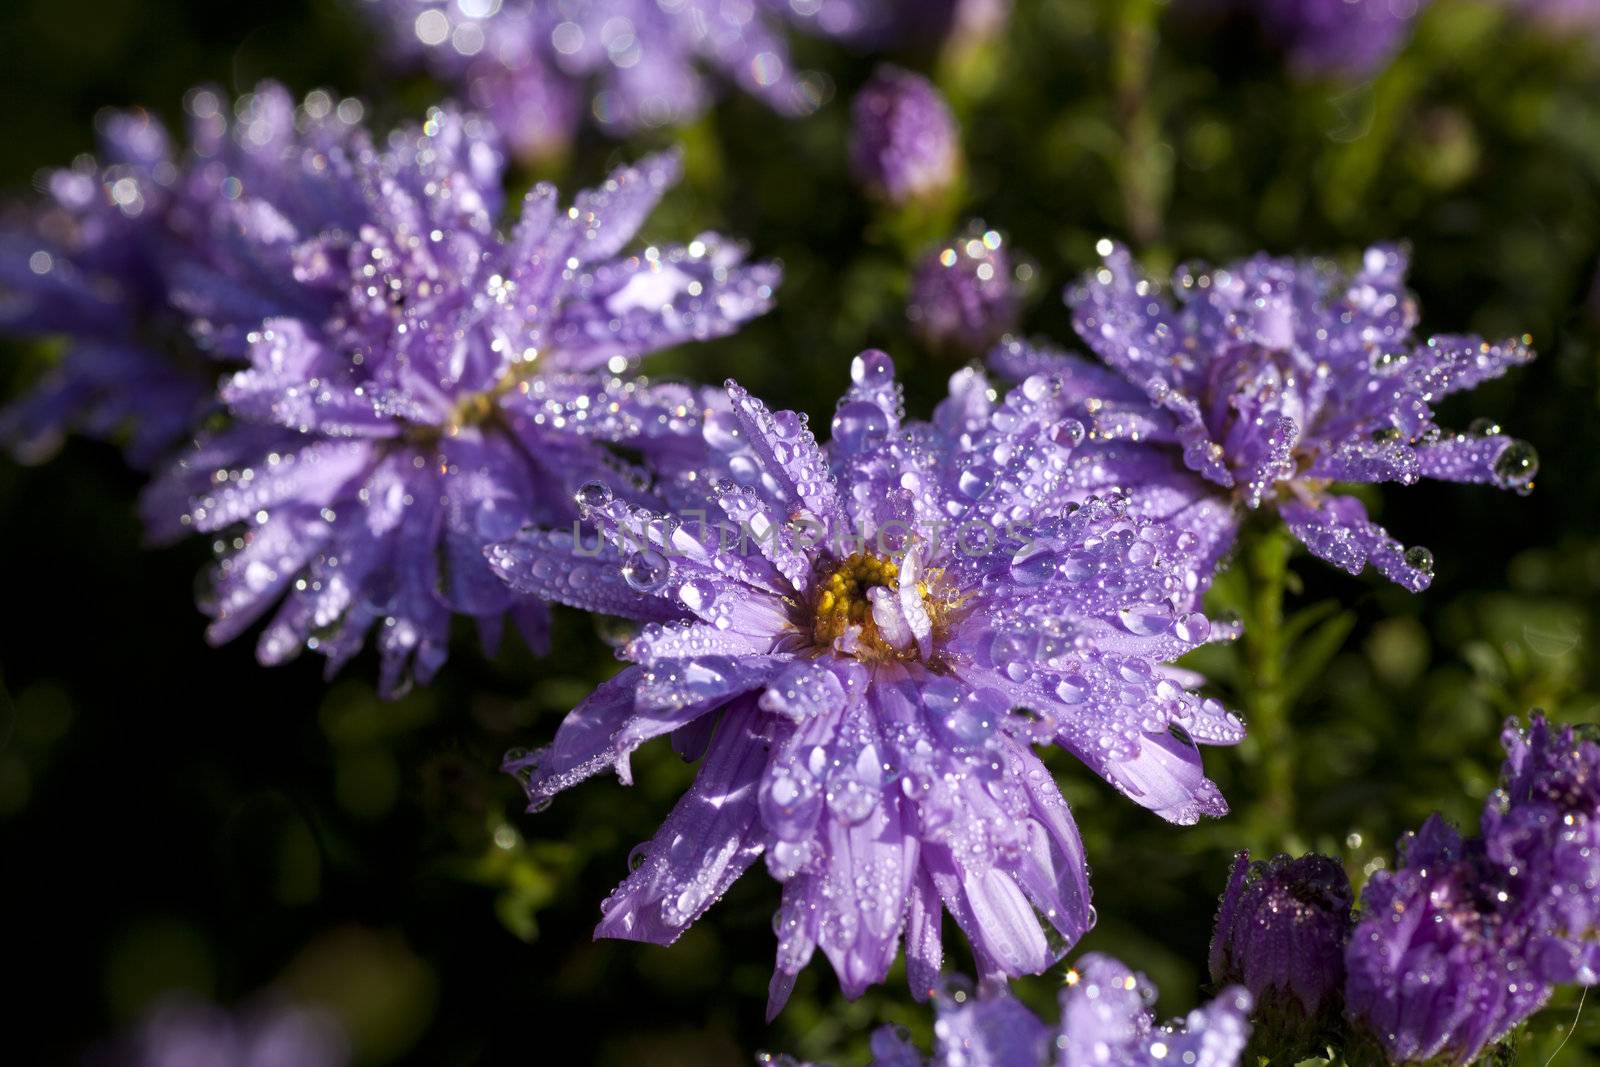 Dew drops on purple flowers in the morning sun.